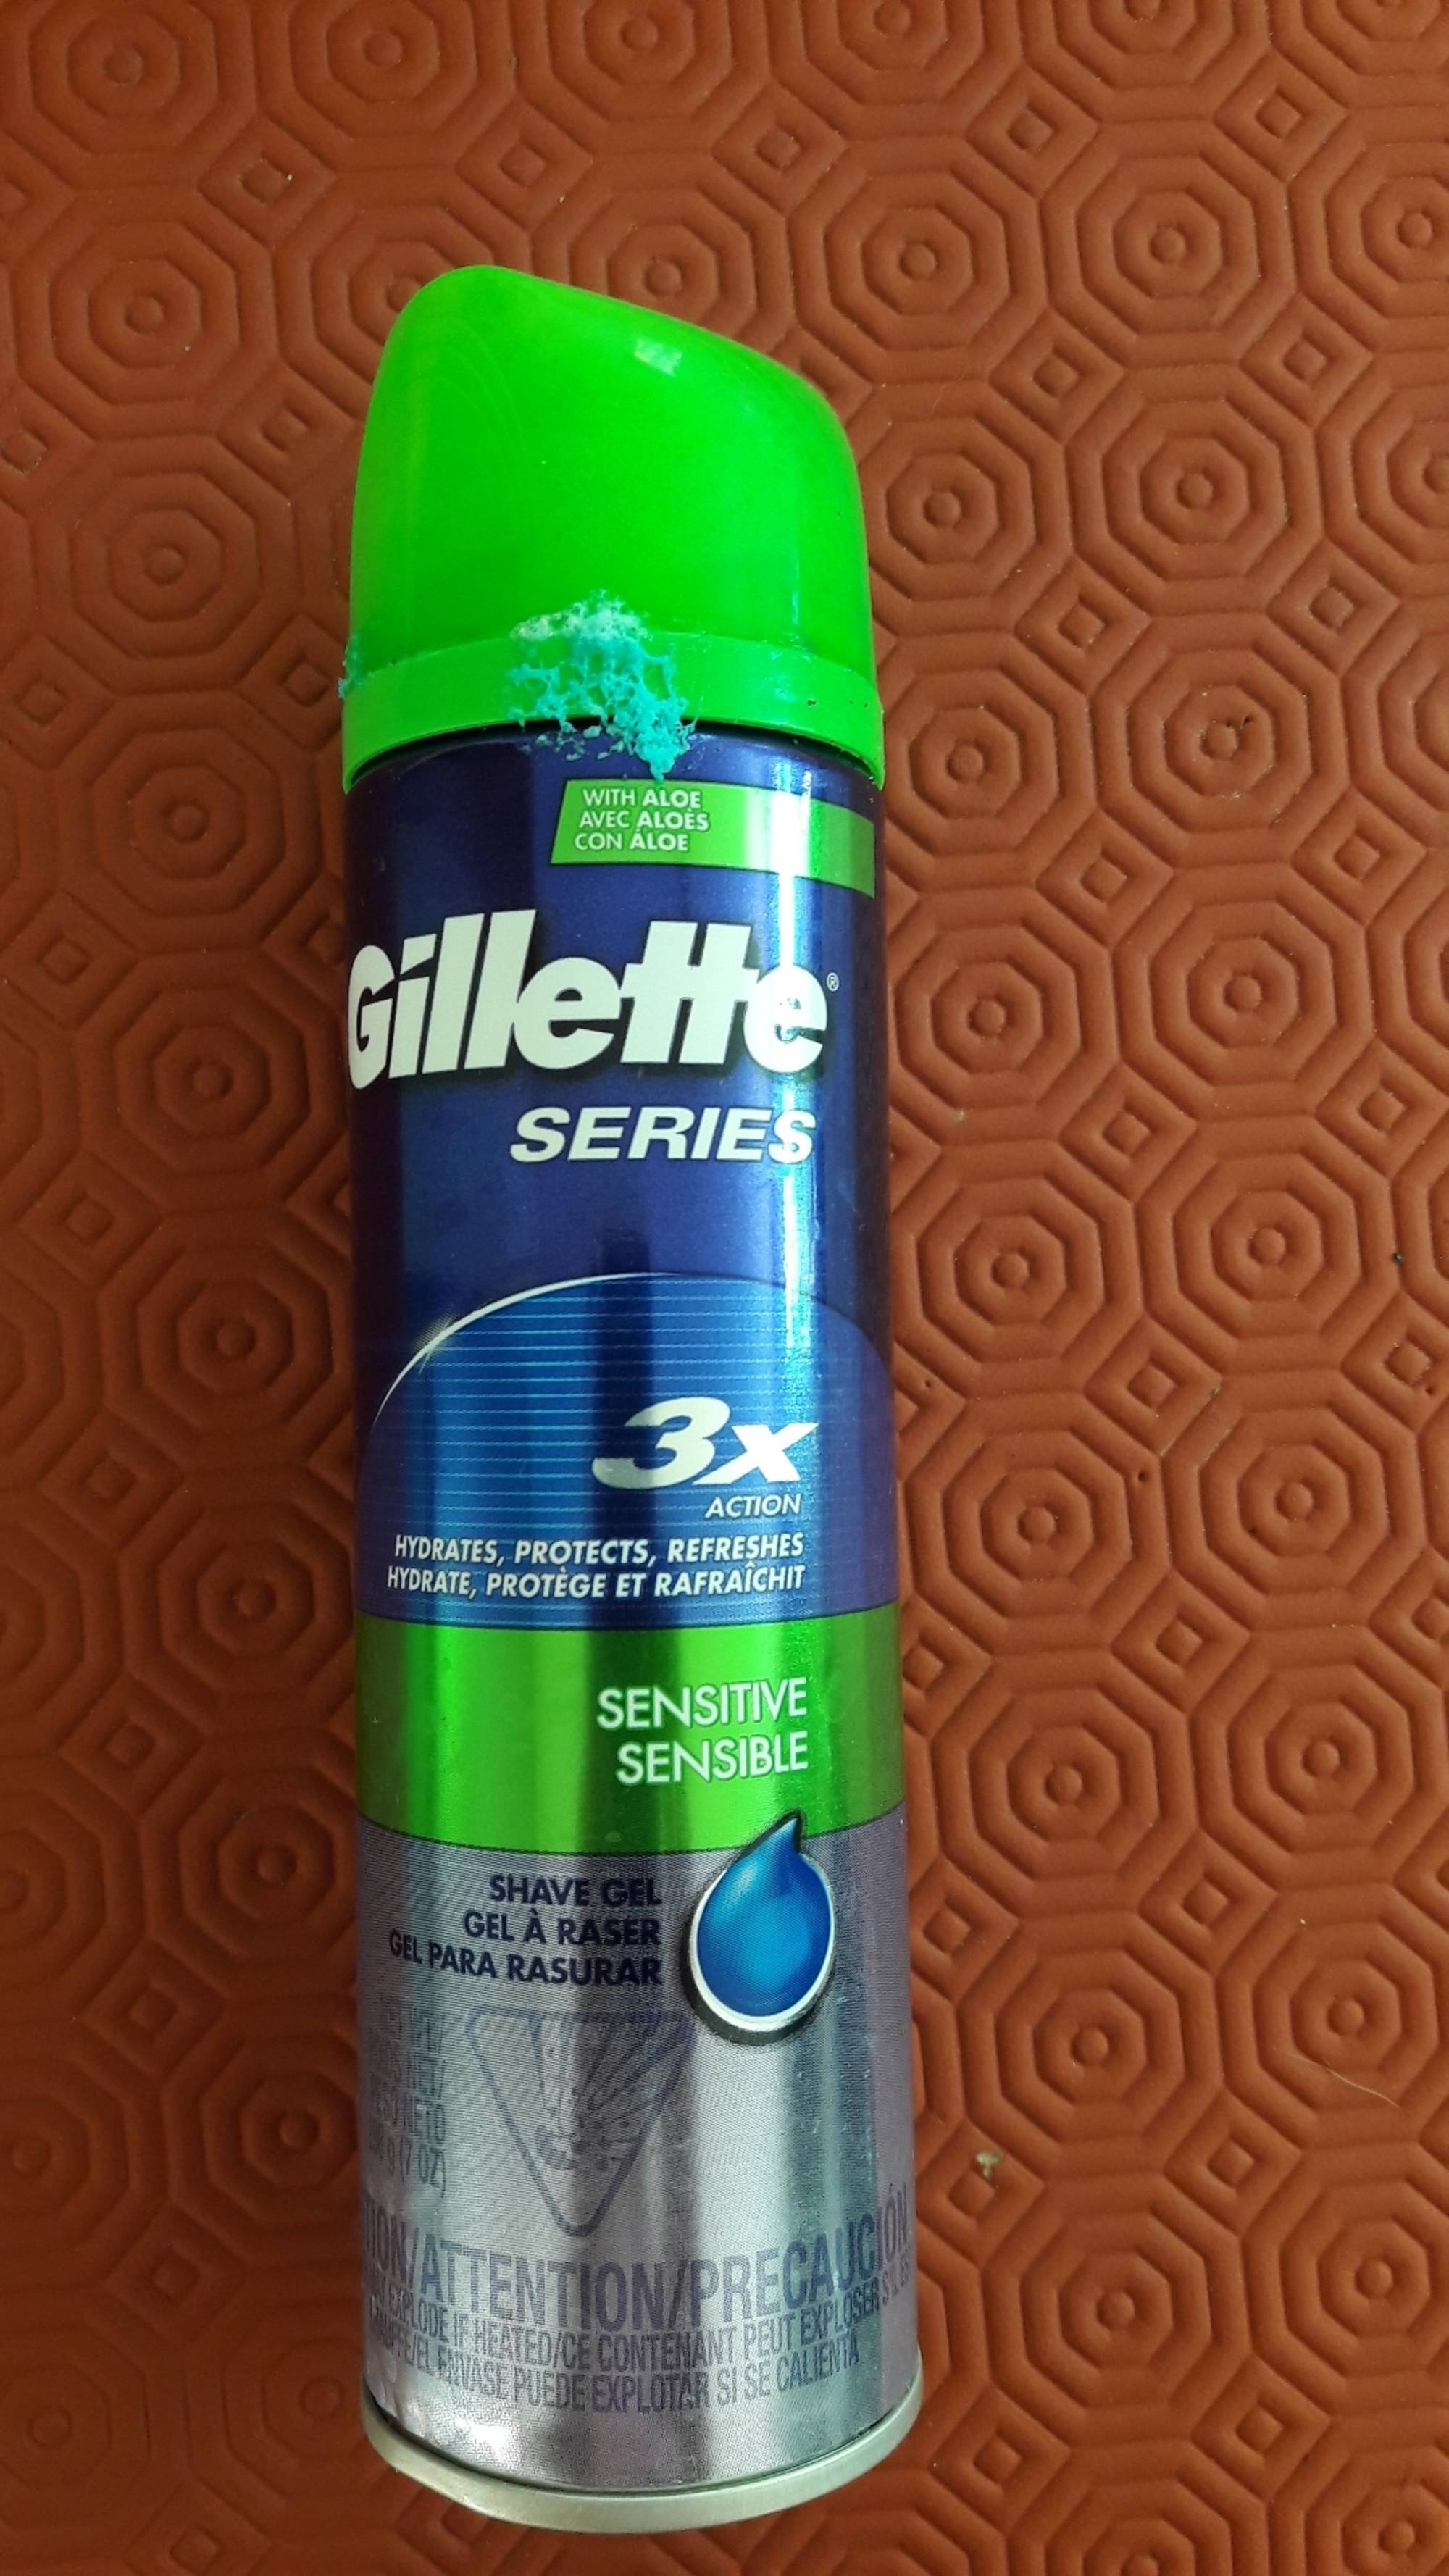 GILLETTE - Series 3x action - Sensitive sensible gel à raser